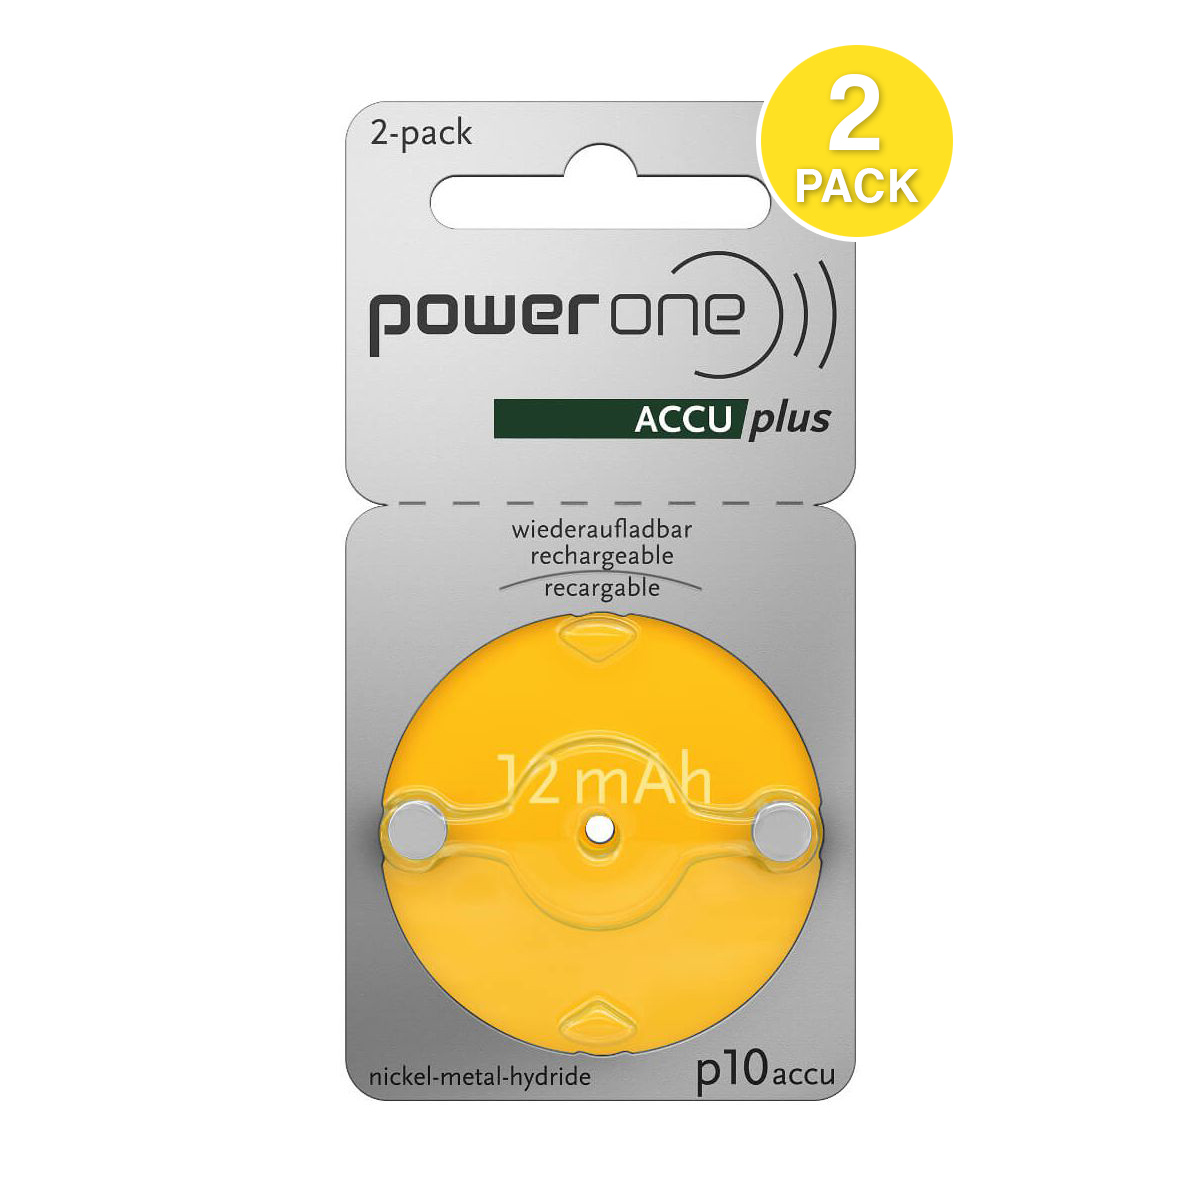 Perforeren Alstublieft troon PowerOne Accu plus NiMH Rechargeable Hearing Aid Battery P10, 2 batteries